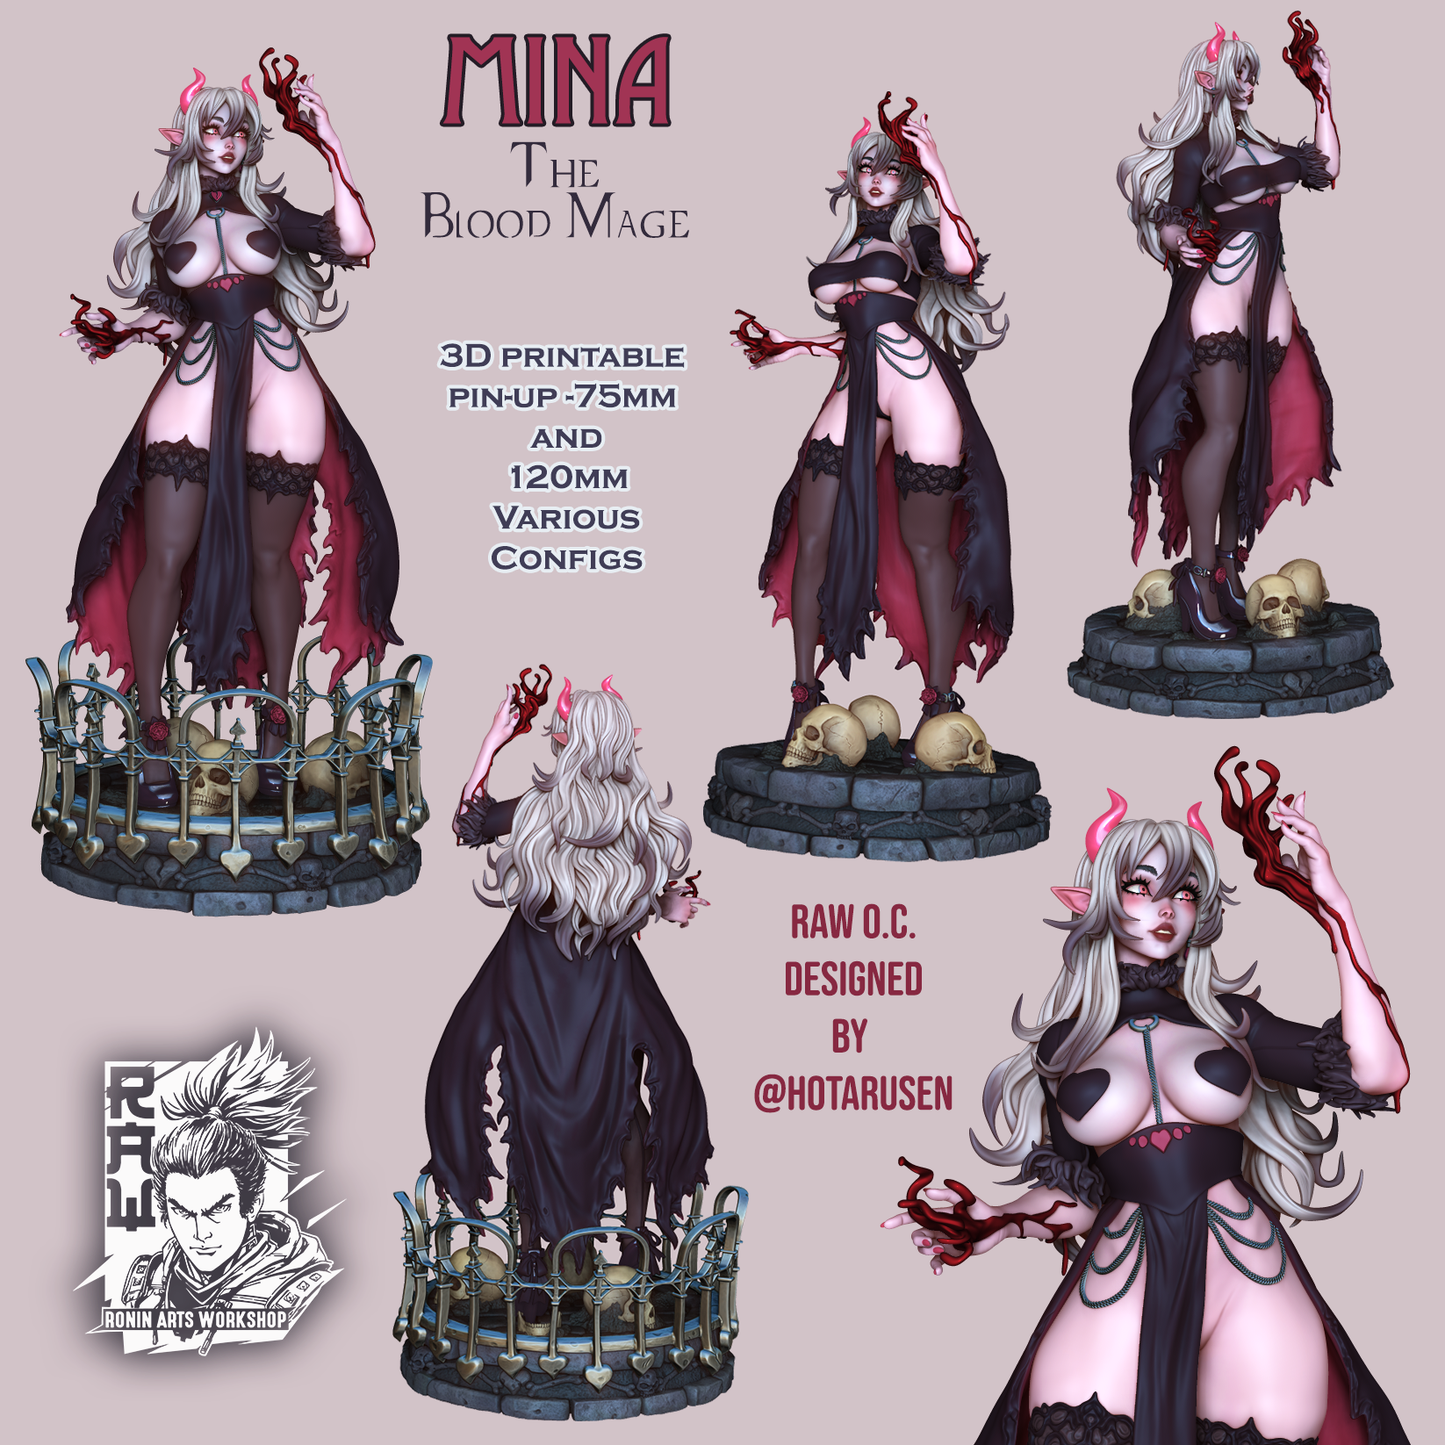 Blood Mage Mina | Clothed or Nude | Resin 3D Printed Pinup | Ronin Arts Workshop